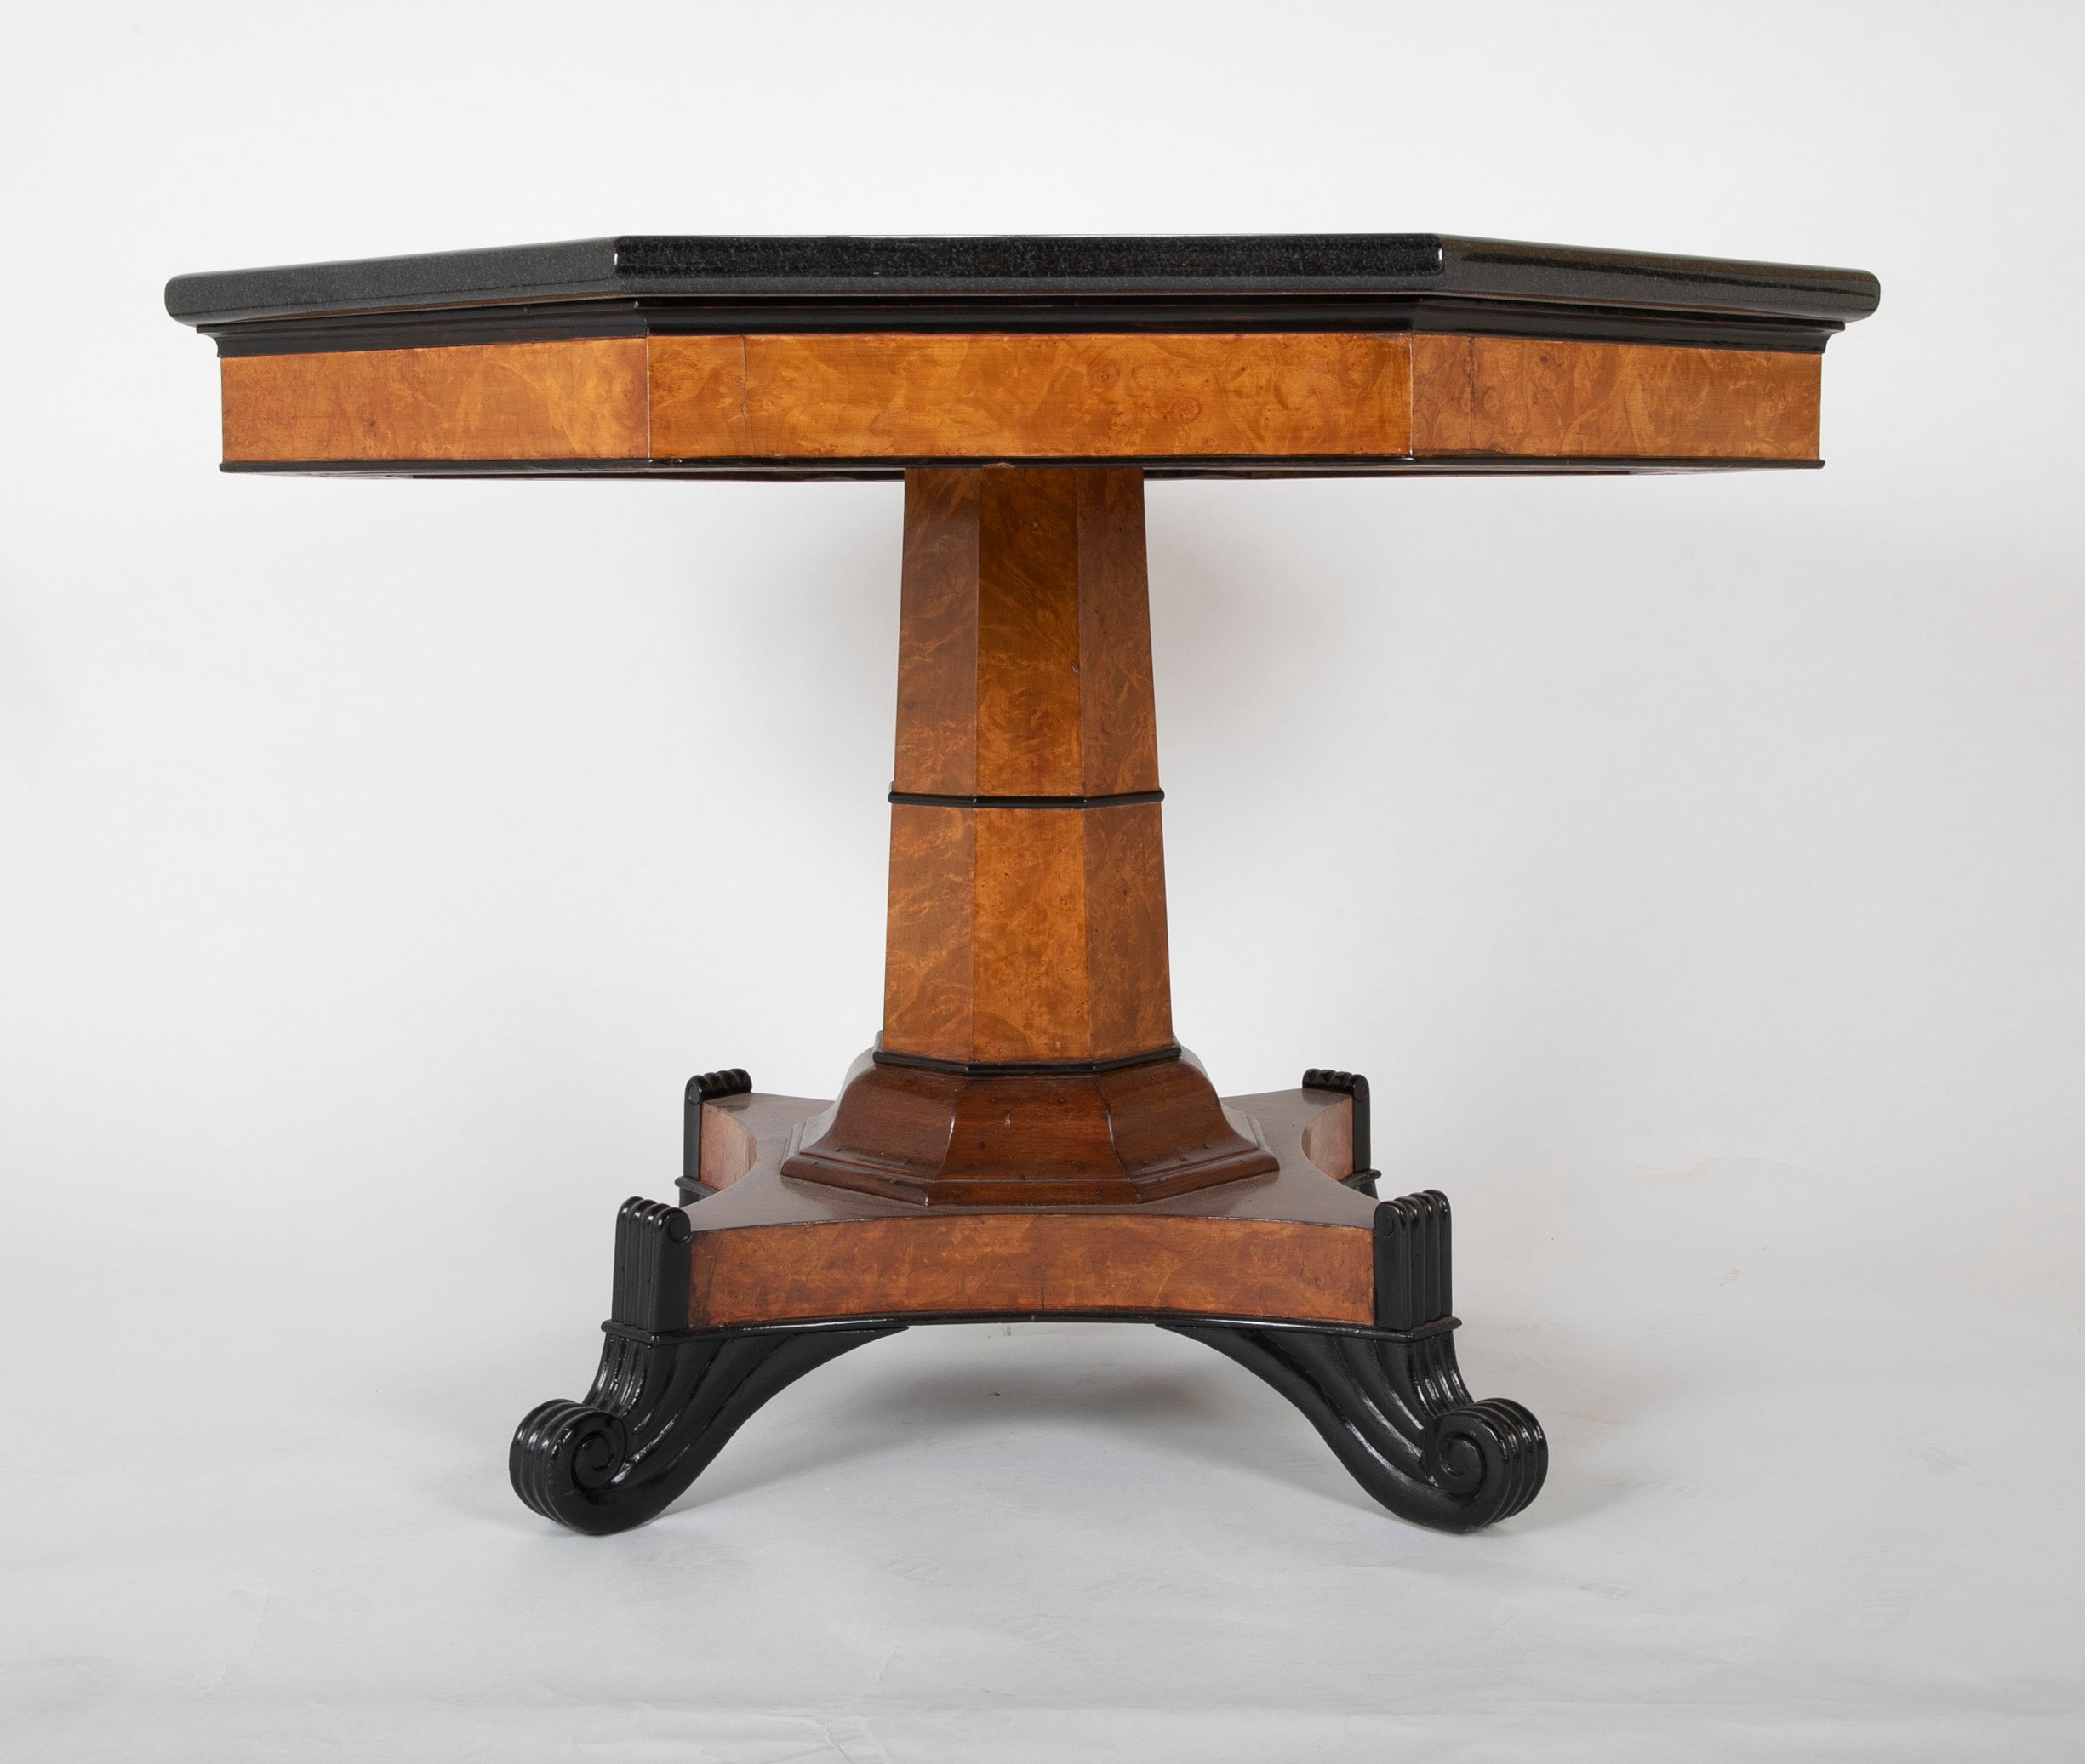 An Octagonal Biedermeier Style Marble Top Center Table